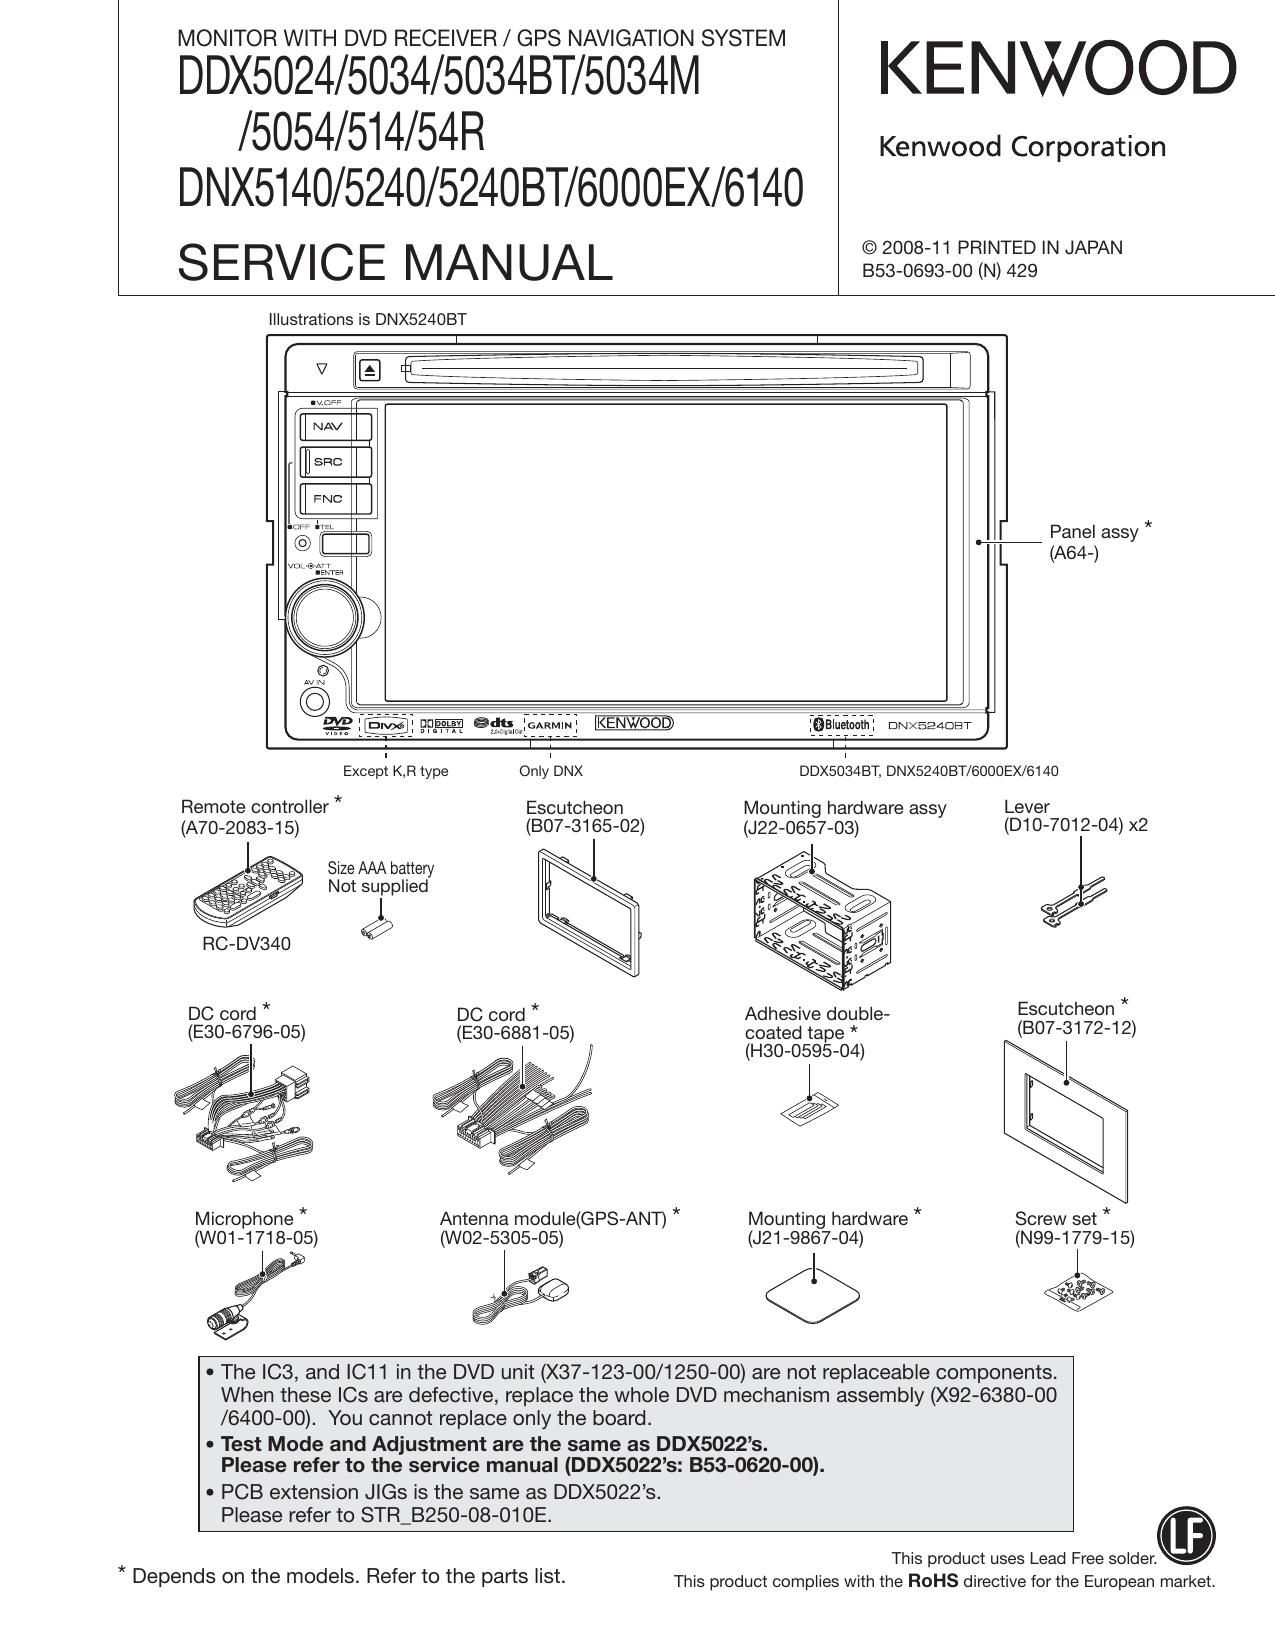 Kenwood DDX 5054 HU Service Manual